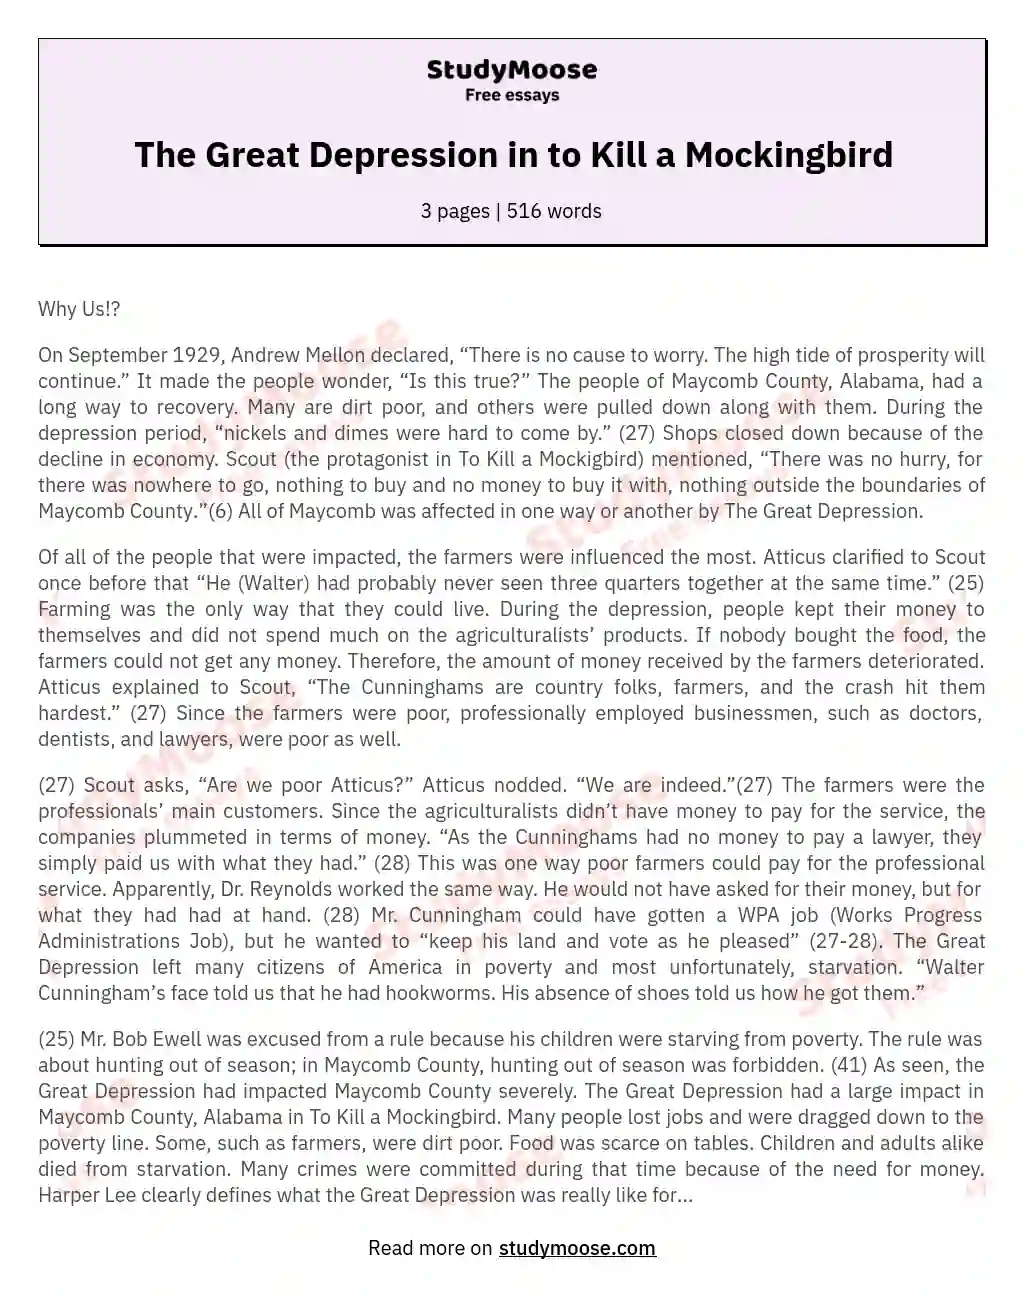 The Great Depression in to Kill a Mockingbird essay